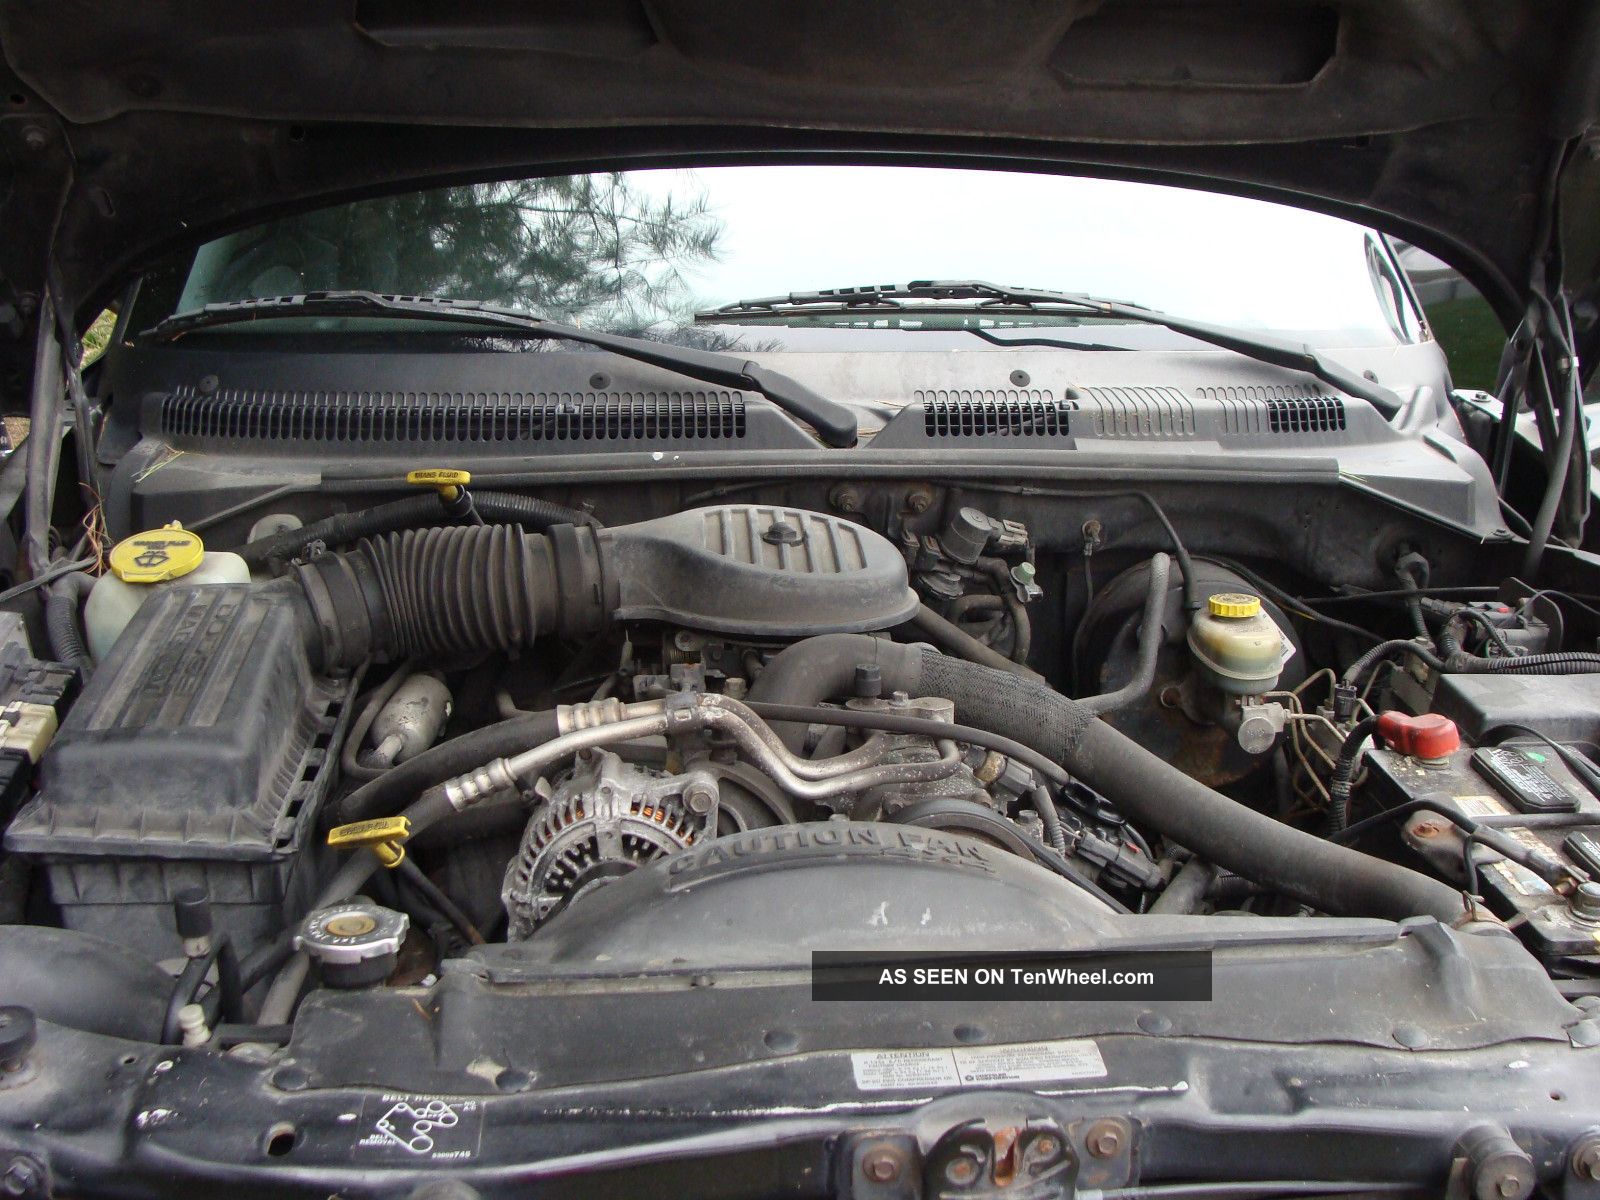 1998 Dodge Durango Slt 5. 2l Runs Good, Needs Tranny Work 1998 Dodge Durango Engine 5.2 L V8